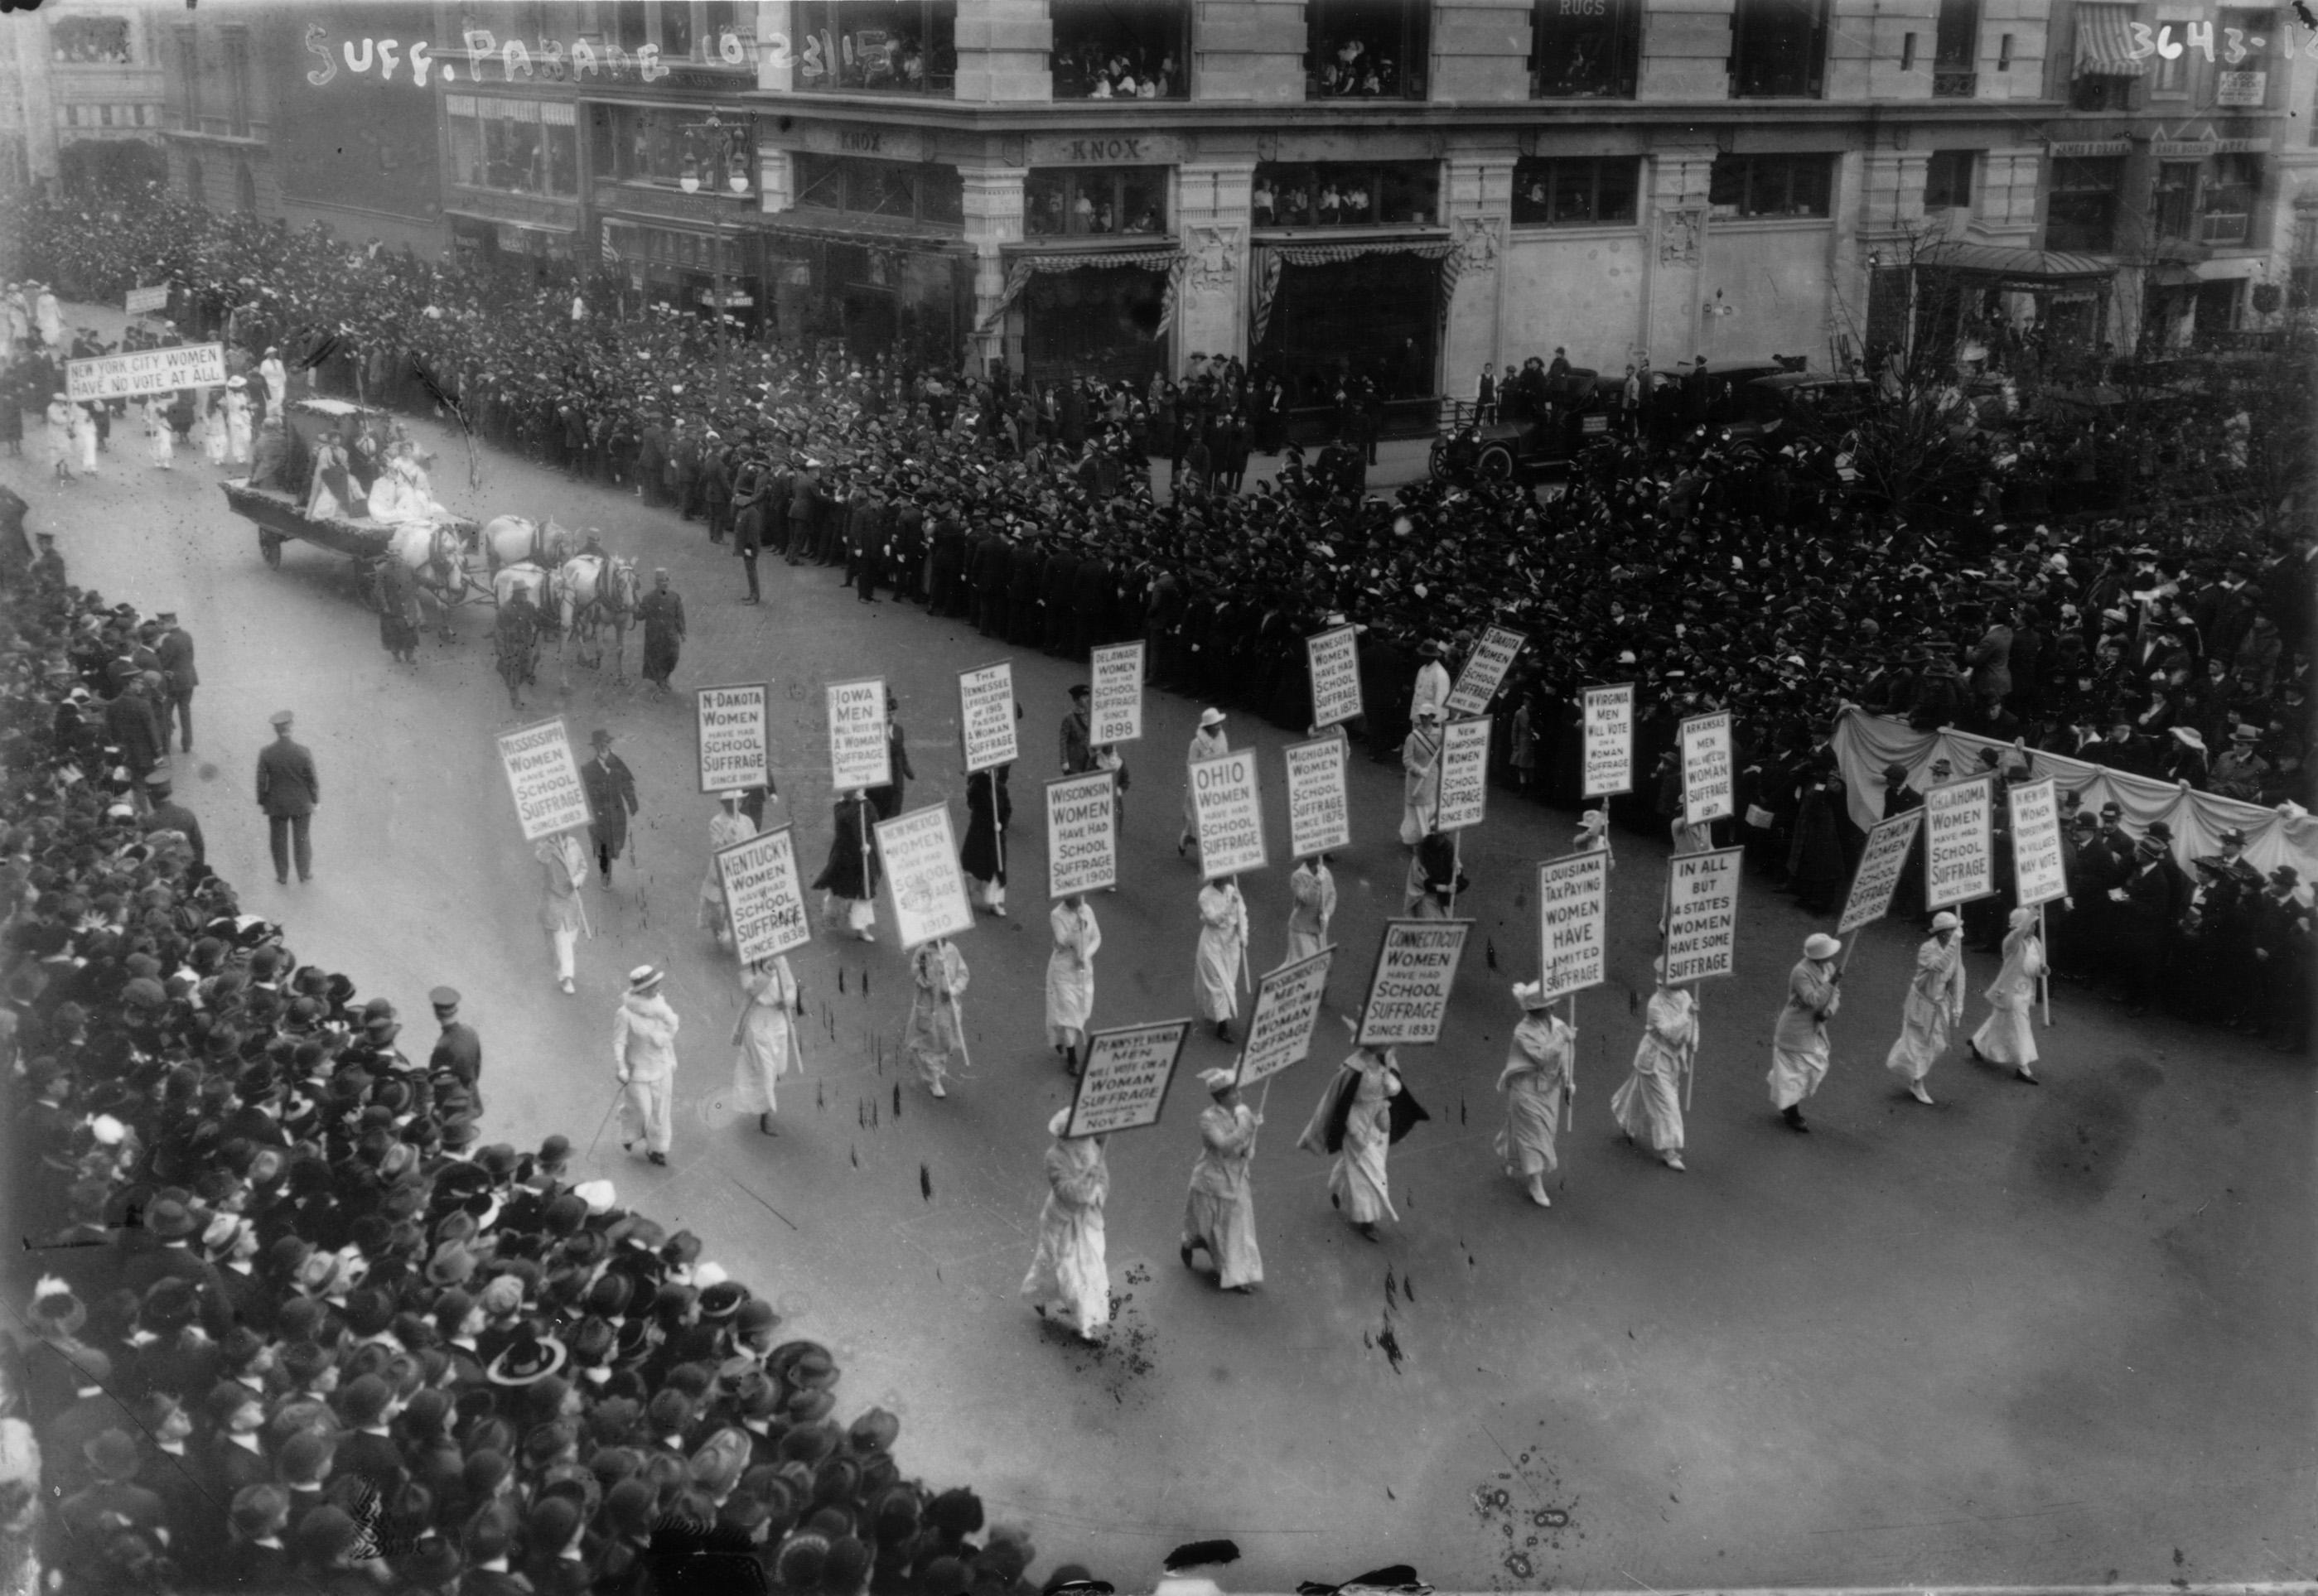 1915 Suffrage March